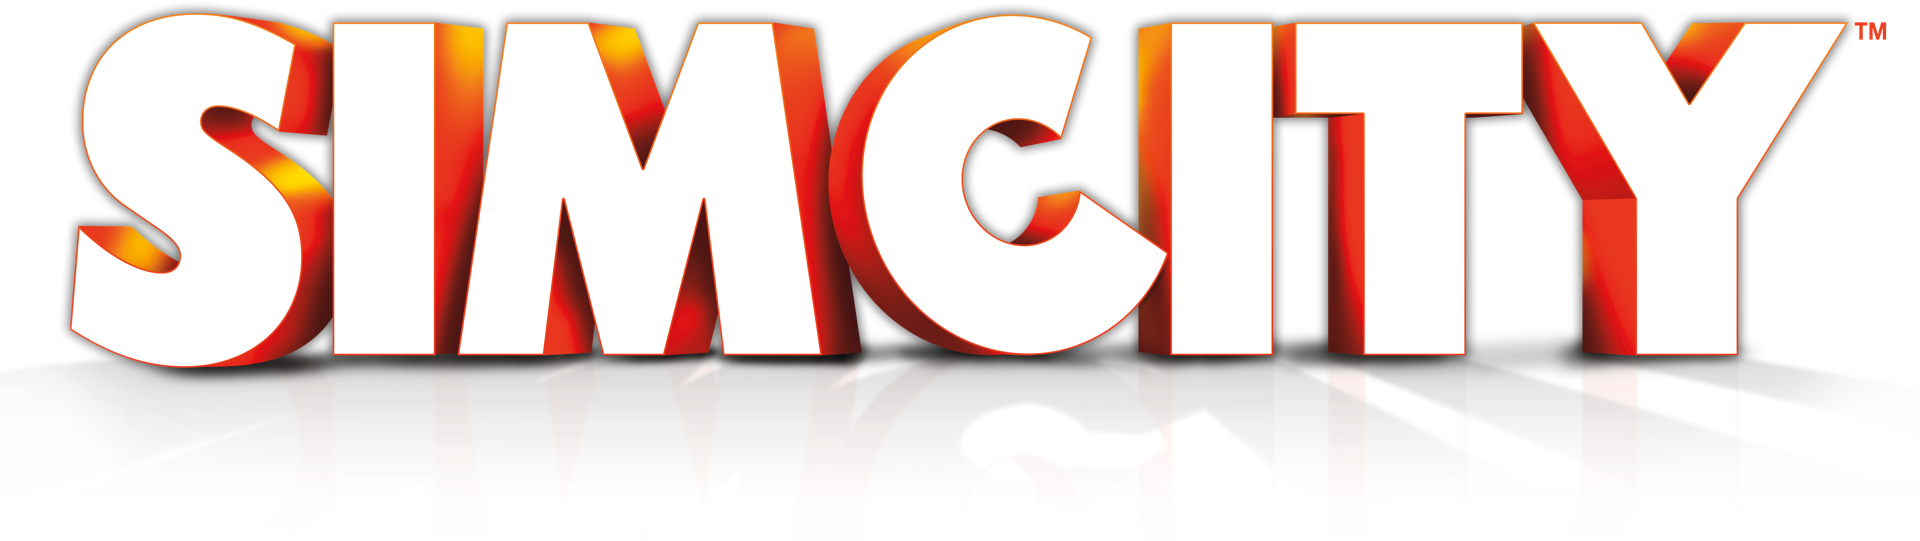 Simcity - Simcity 5 Logo Png (1920x541)